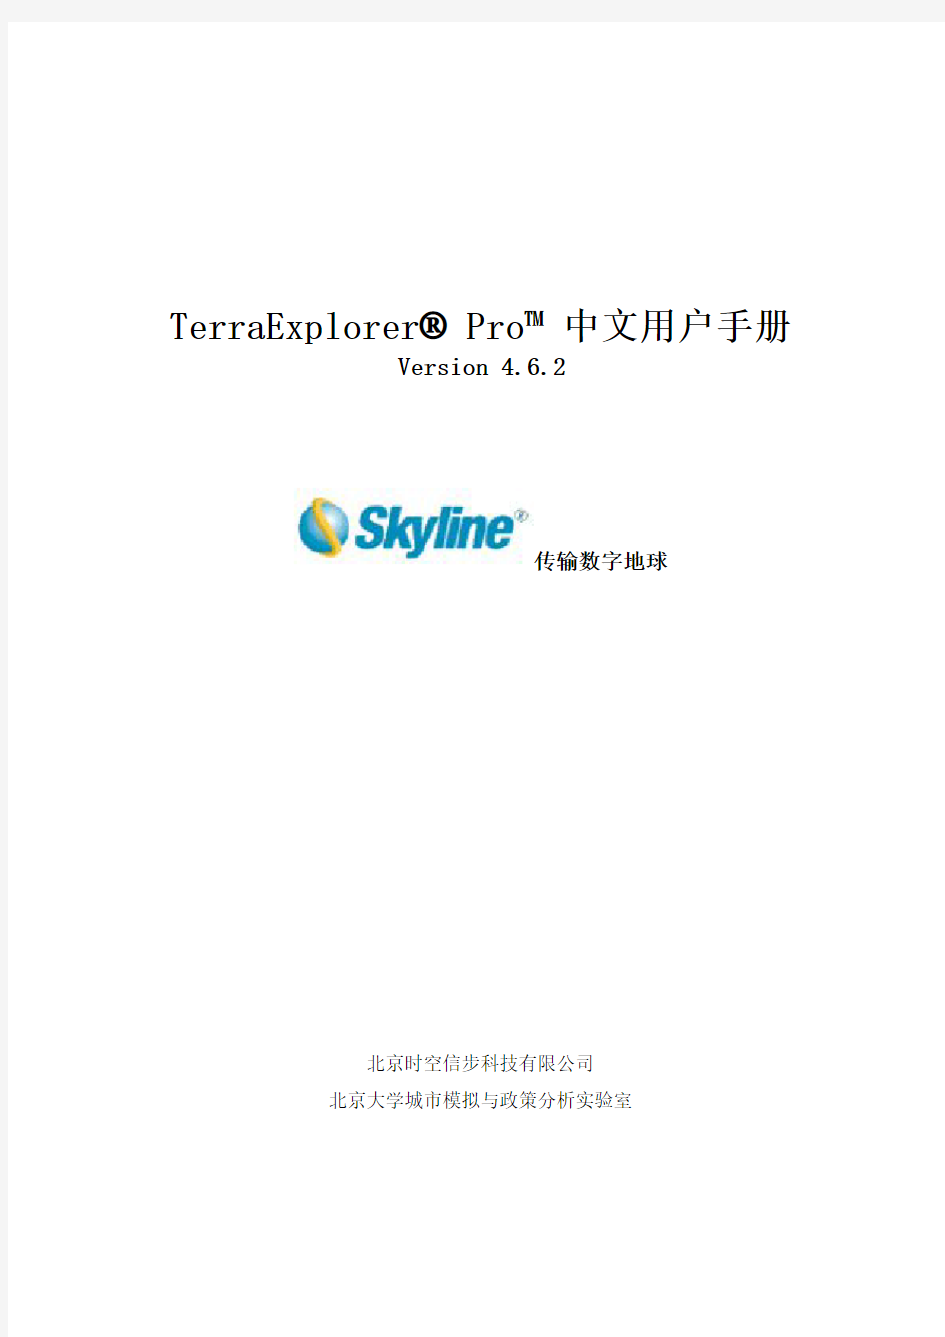 TerraExplorer+Skyline+Pro中文用户手册